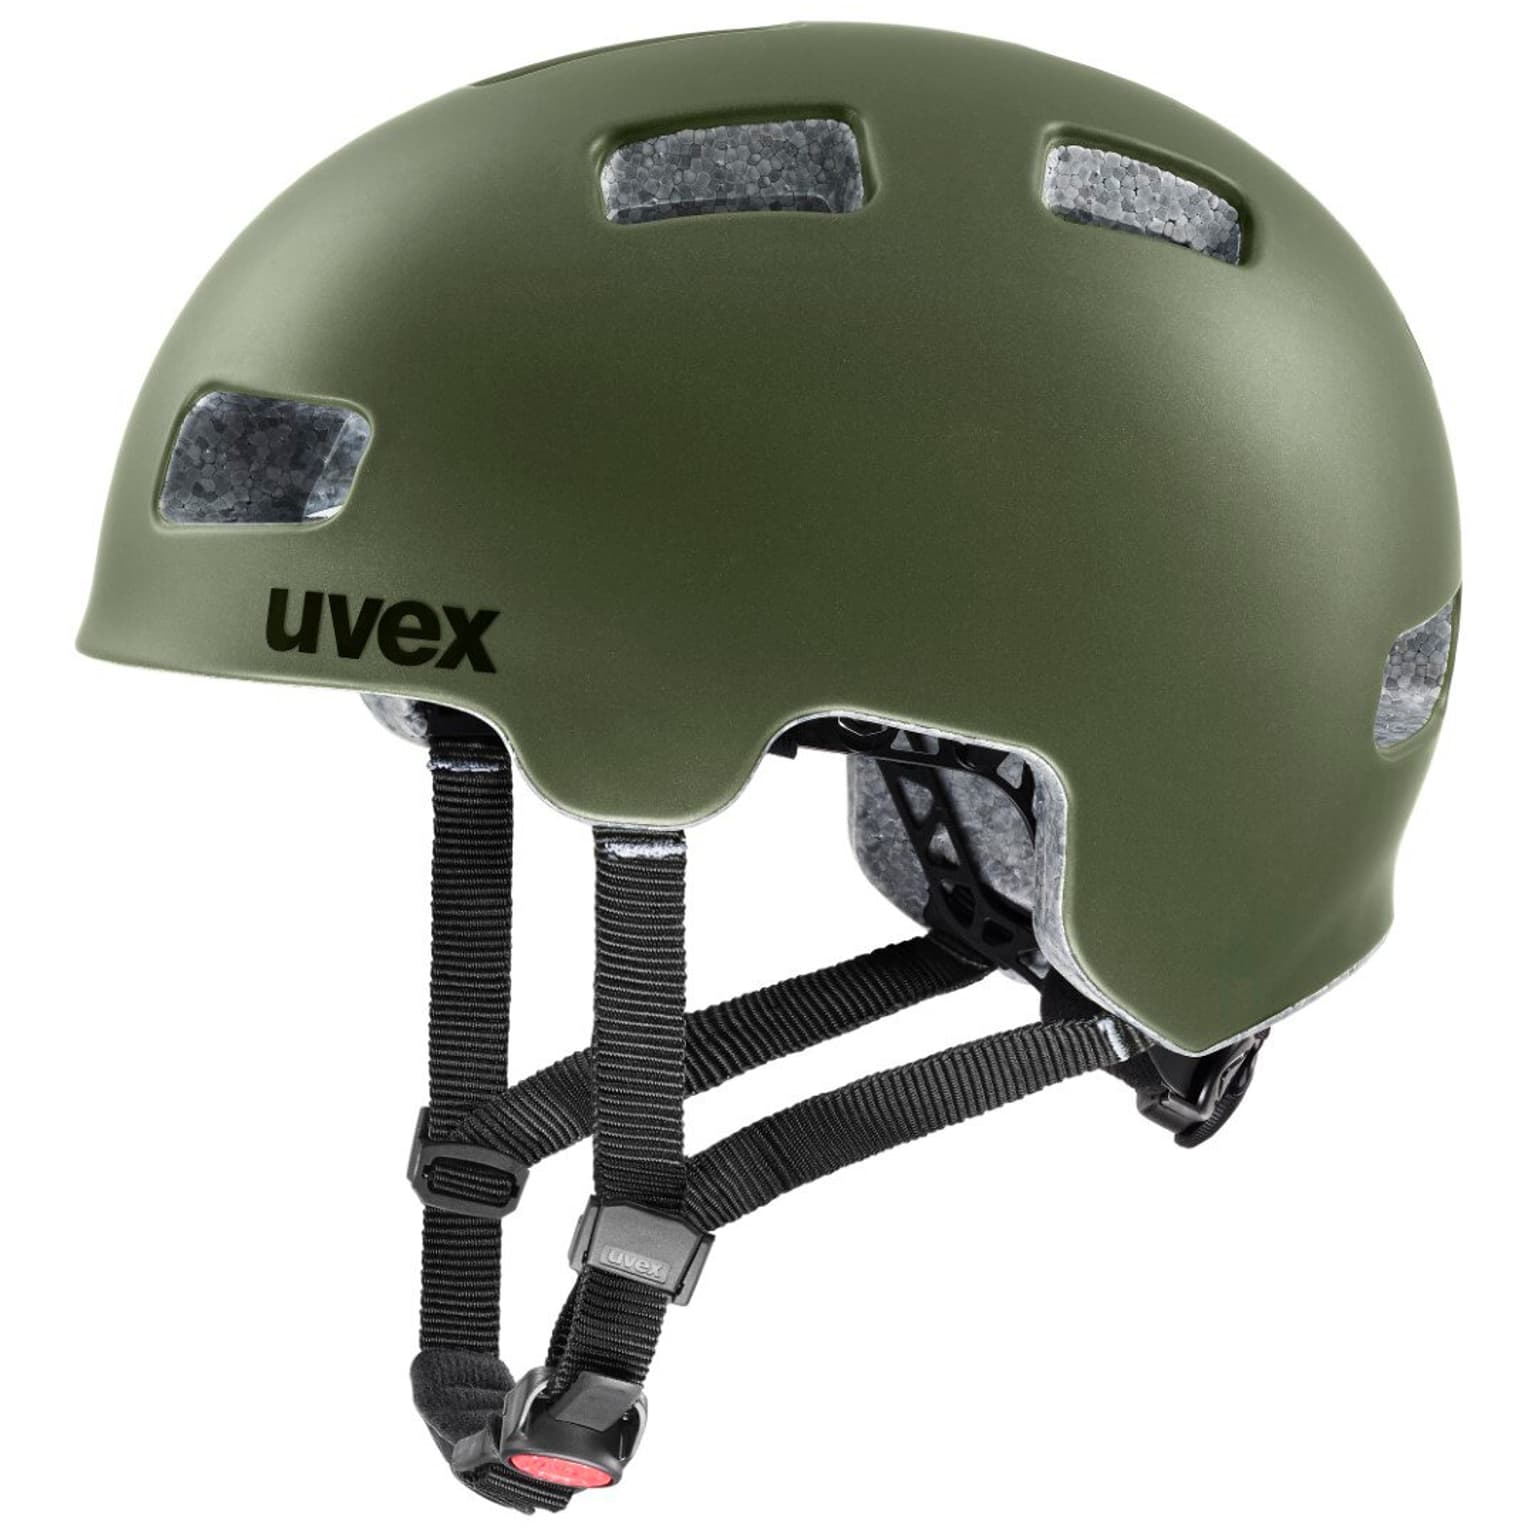 Uvex Uvex hlmt 4 cc Casco da bicicletta oliva 1